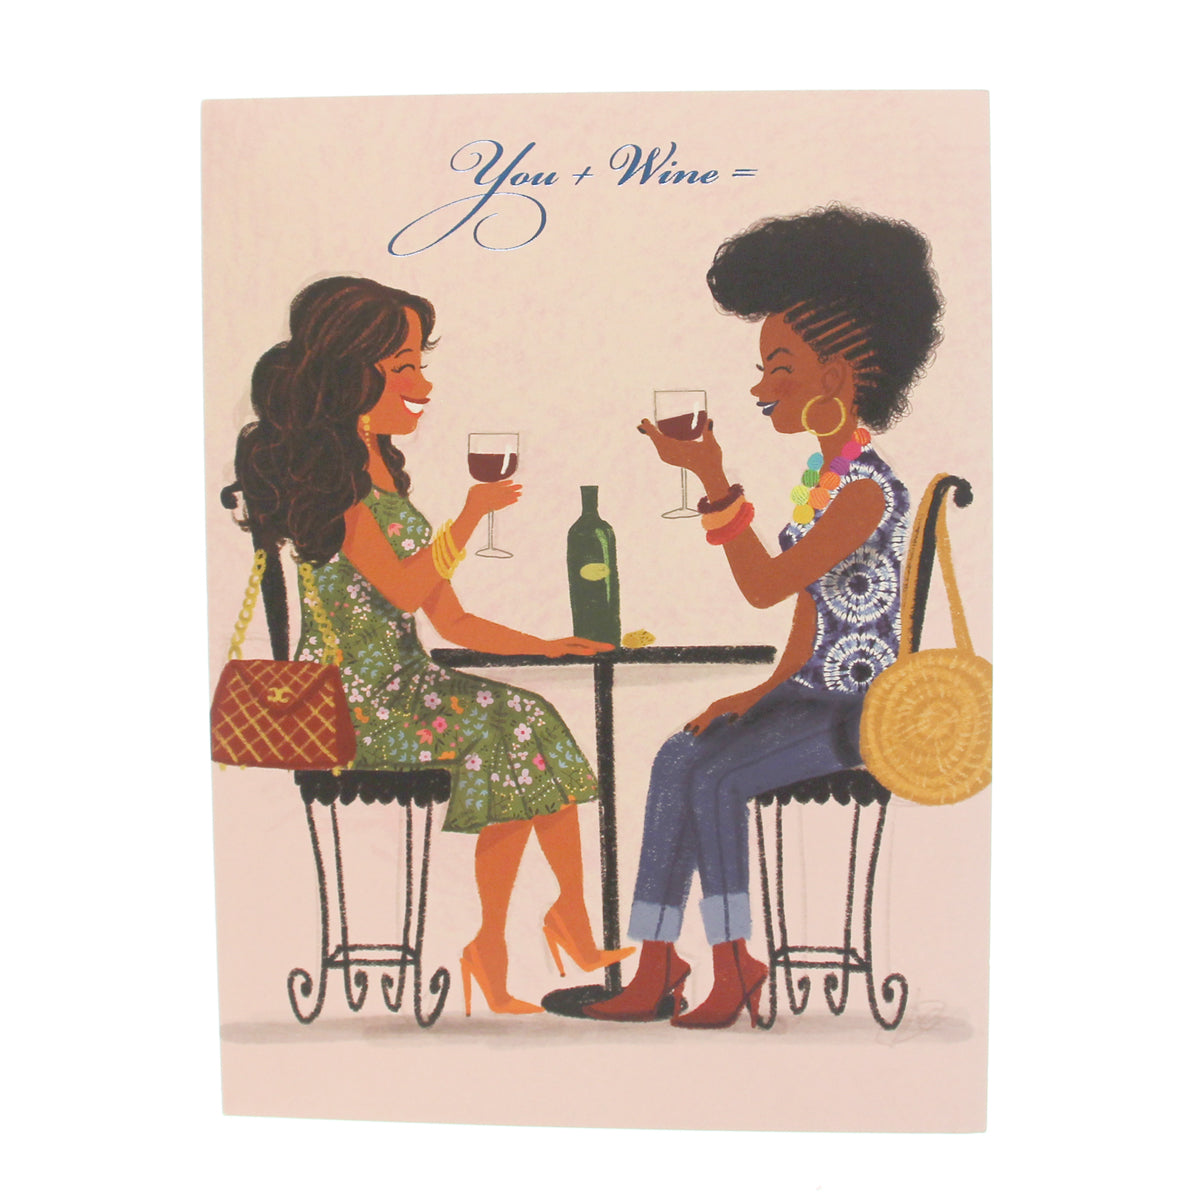 Friendship Card - You + Wine